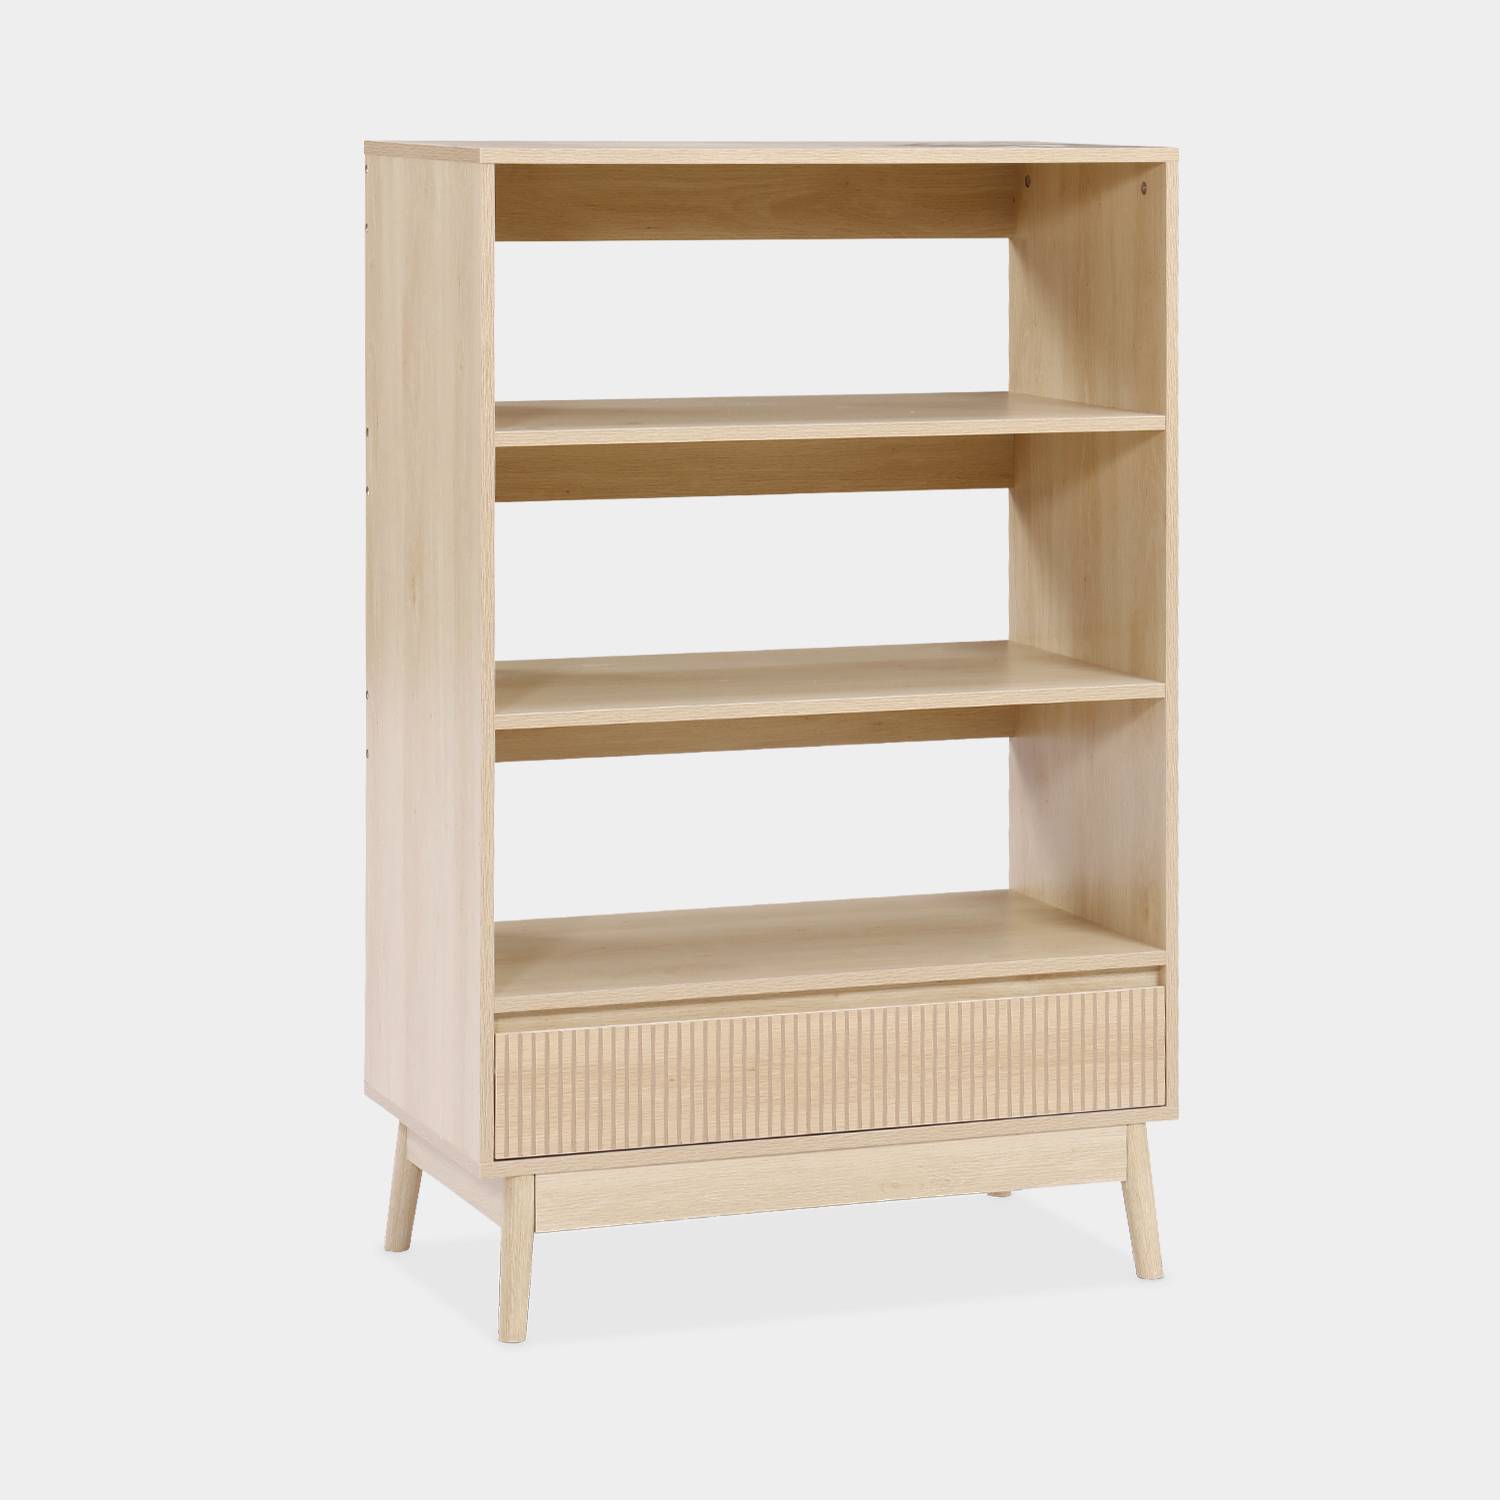 3-level bookshelf with drawer, wood decor, L80xW39.5xH120cm Photo3